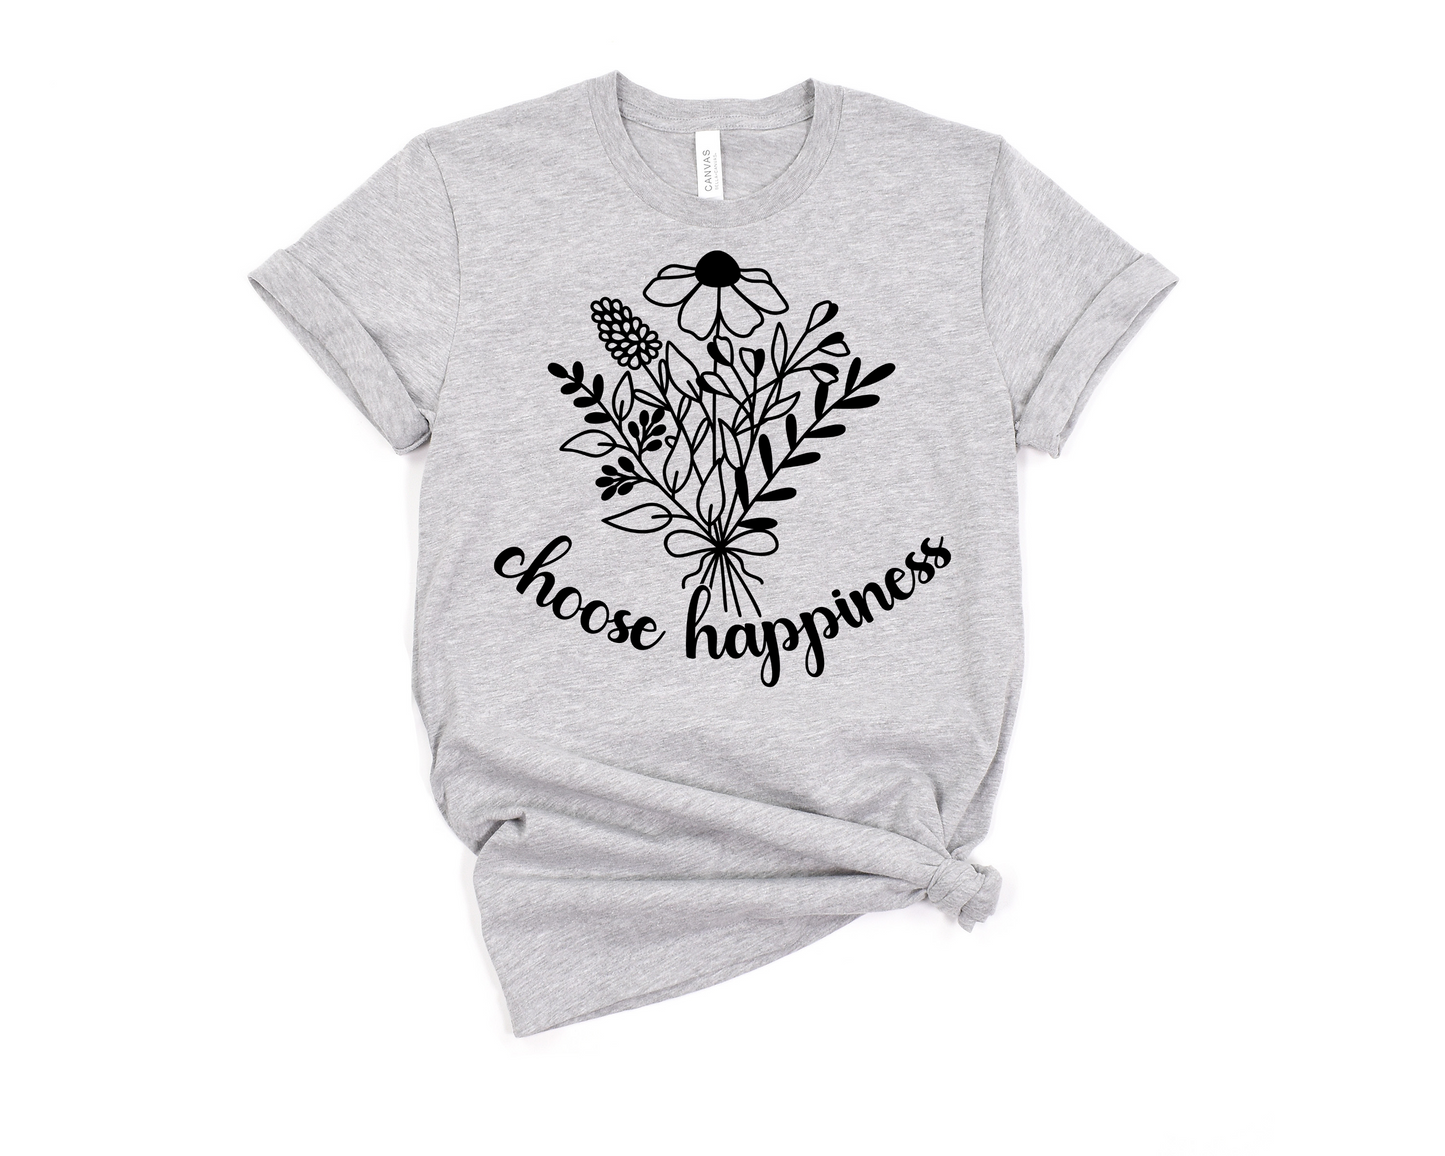 Choose Happiness T-Shirt